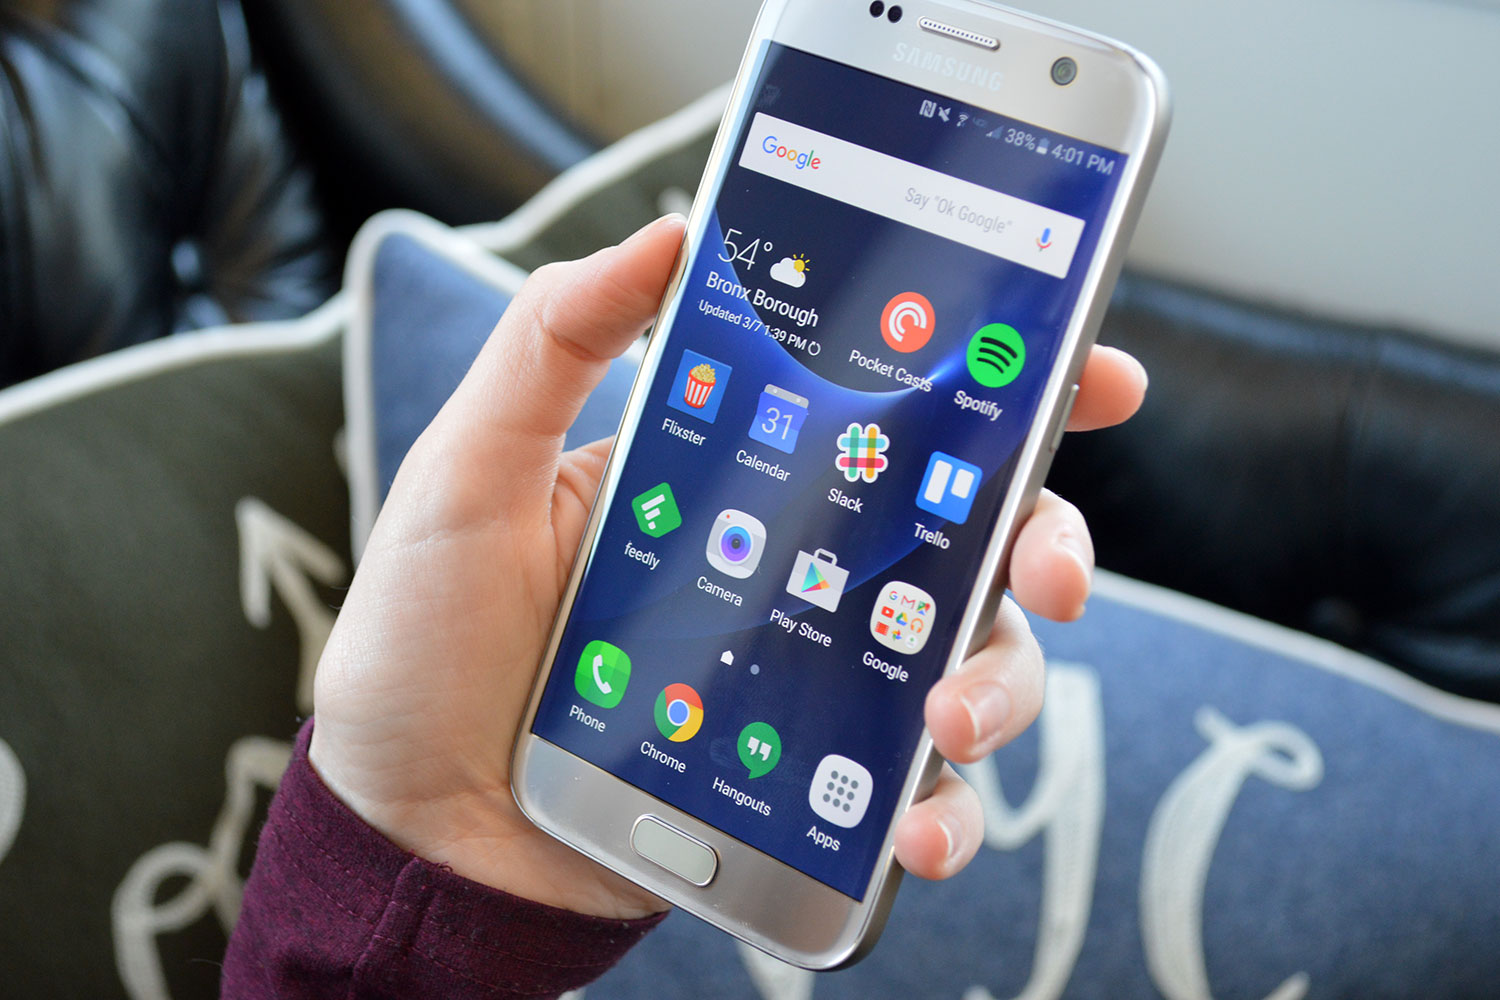 Premier Westers Metalen lijn Galaxy S7 Review | Specs, Availability, and Price | Digital Trends